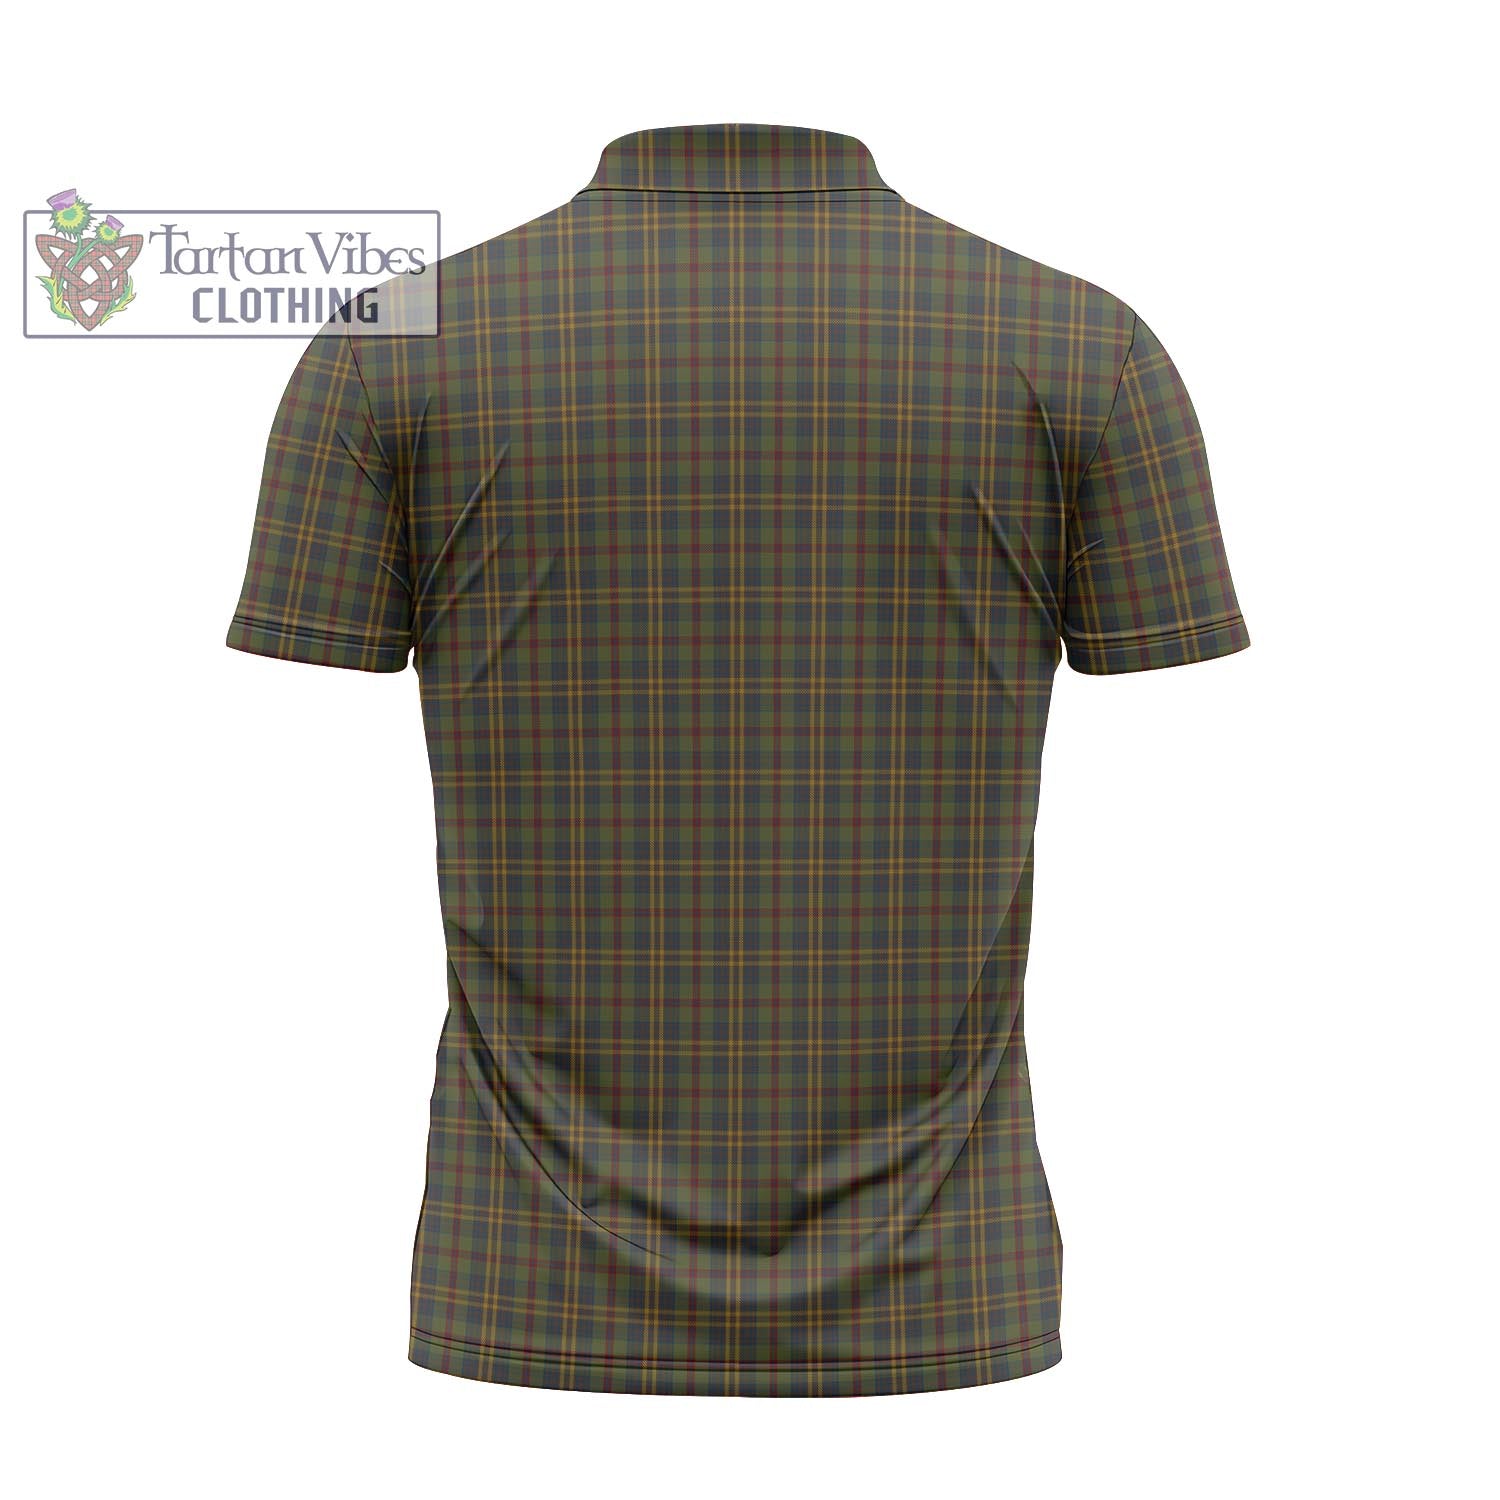 Tartan Vibes Clothing Limerick County Ireland Tartan Zipper Polo Shirt